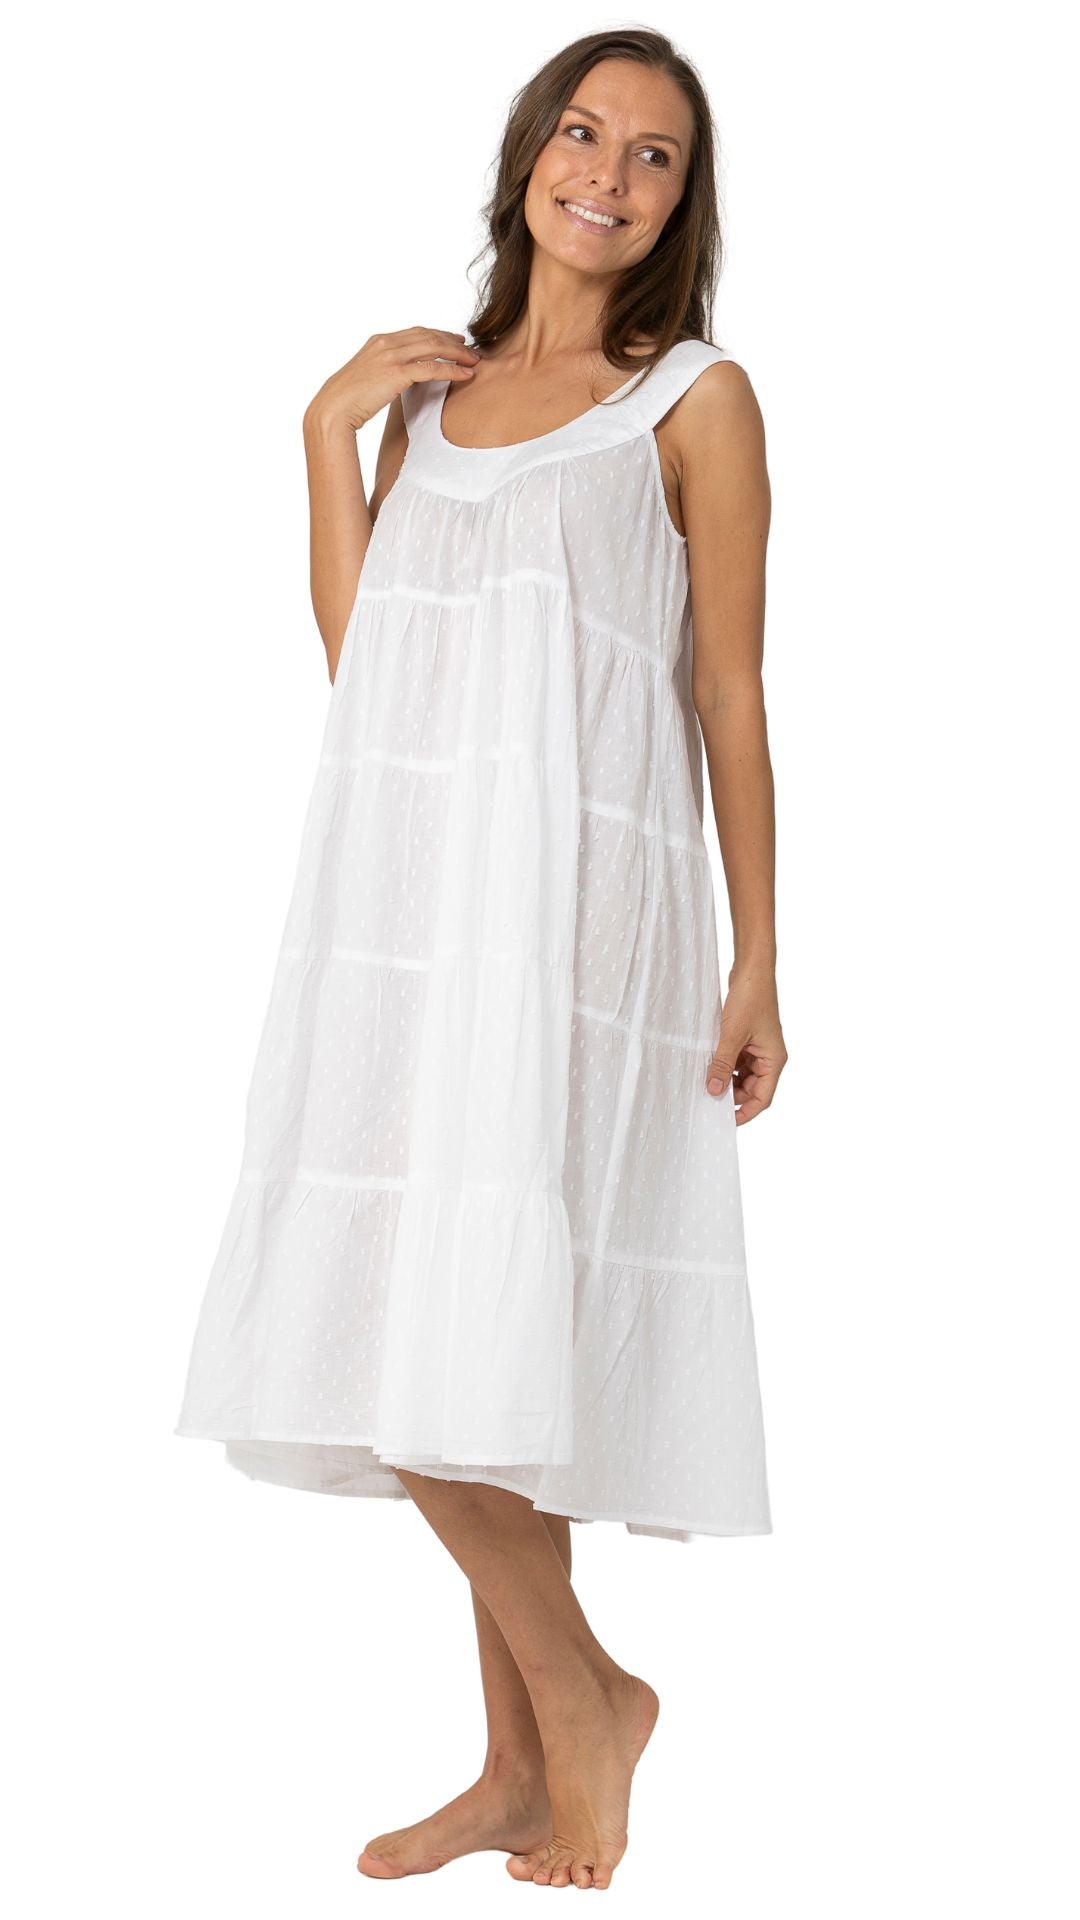 white-cotton-nightdress-on-model-white-background